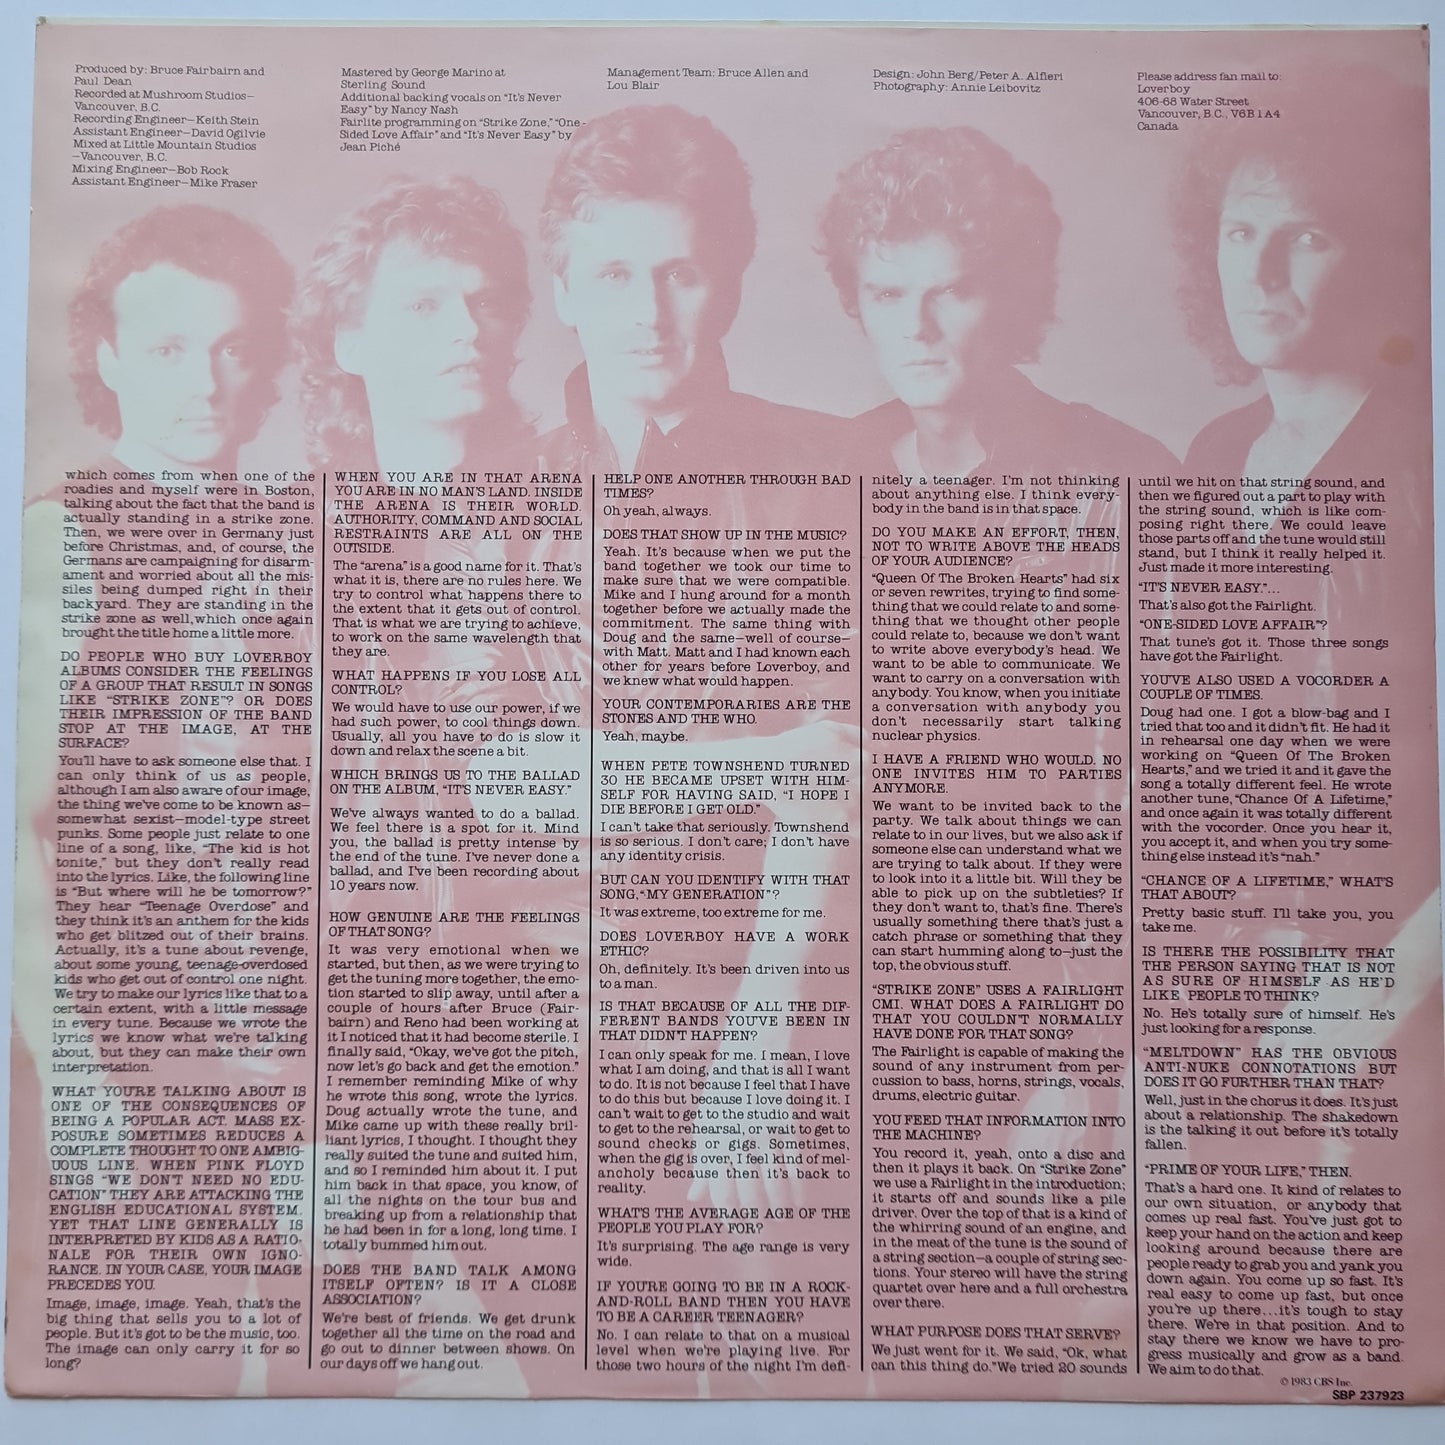 Loverboy – Keep It Up - 1983 - Vinyl Record